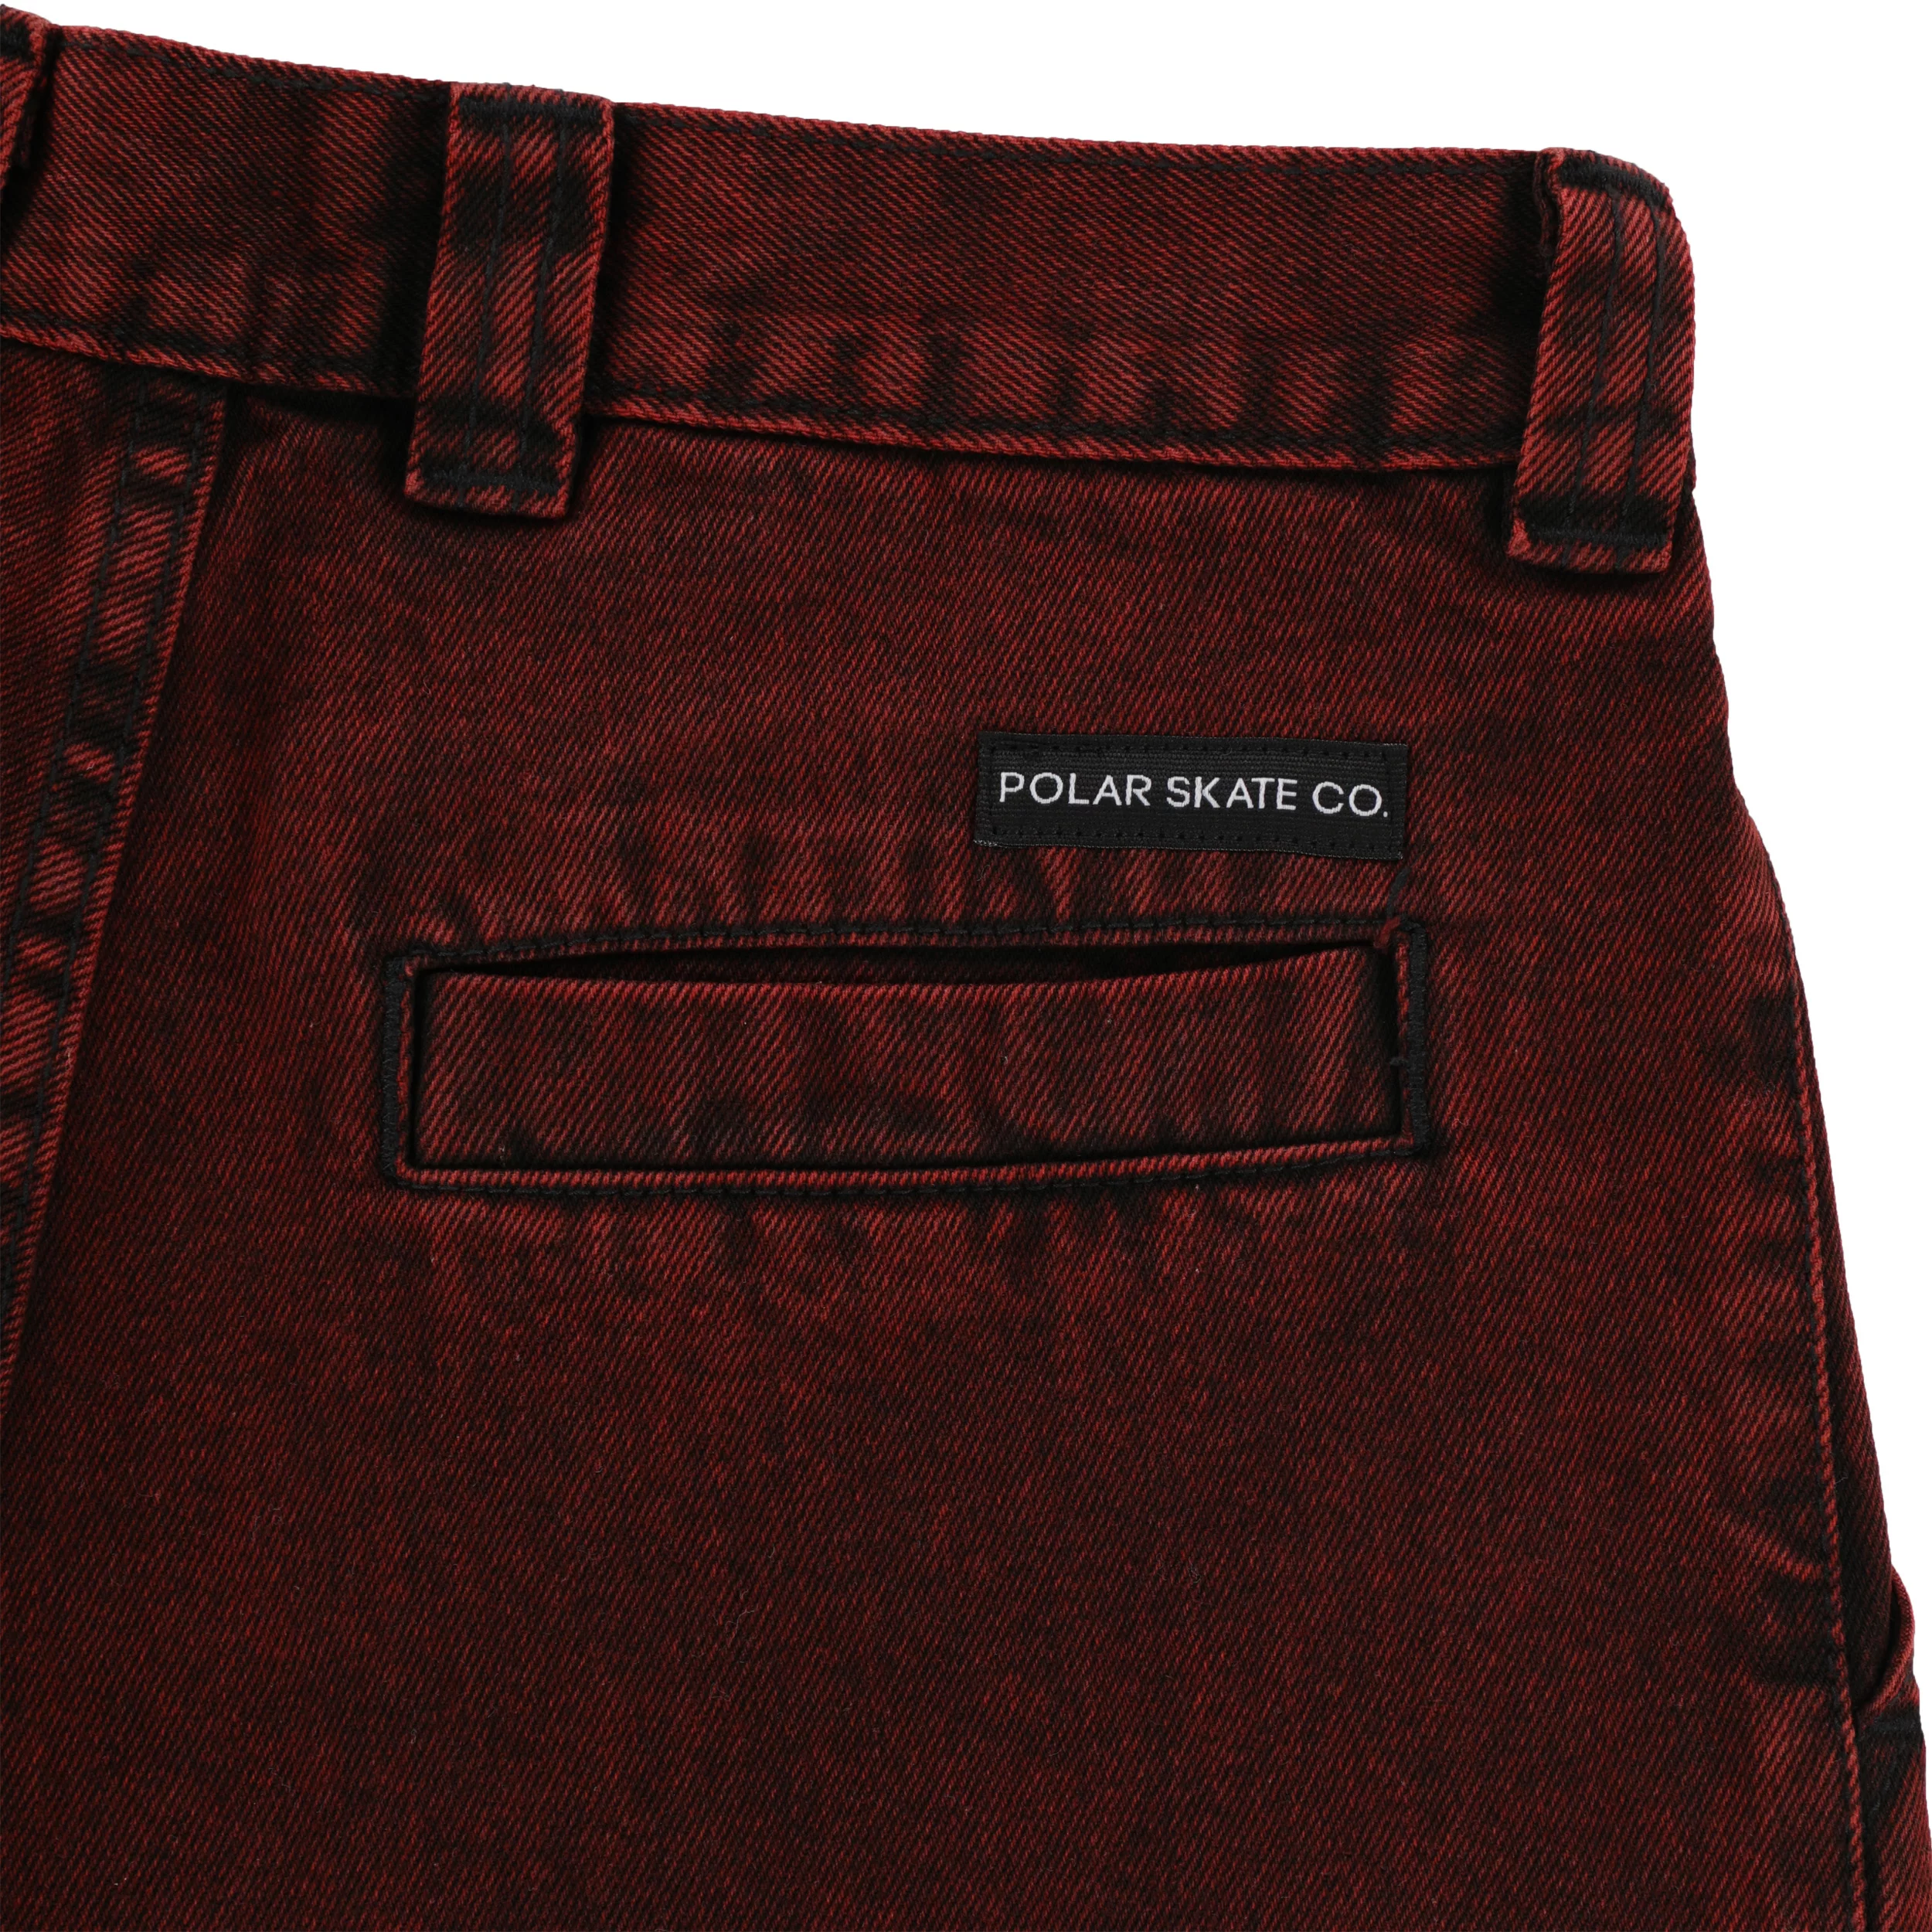 Polar Skate Co. Grund Chino Pants - red black - Free Shipping 